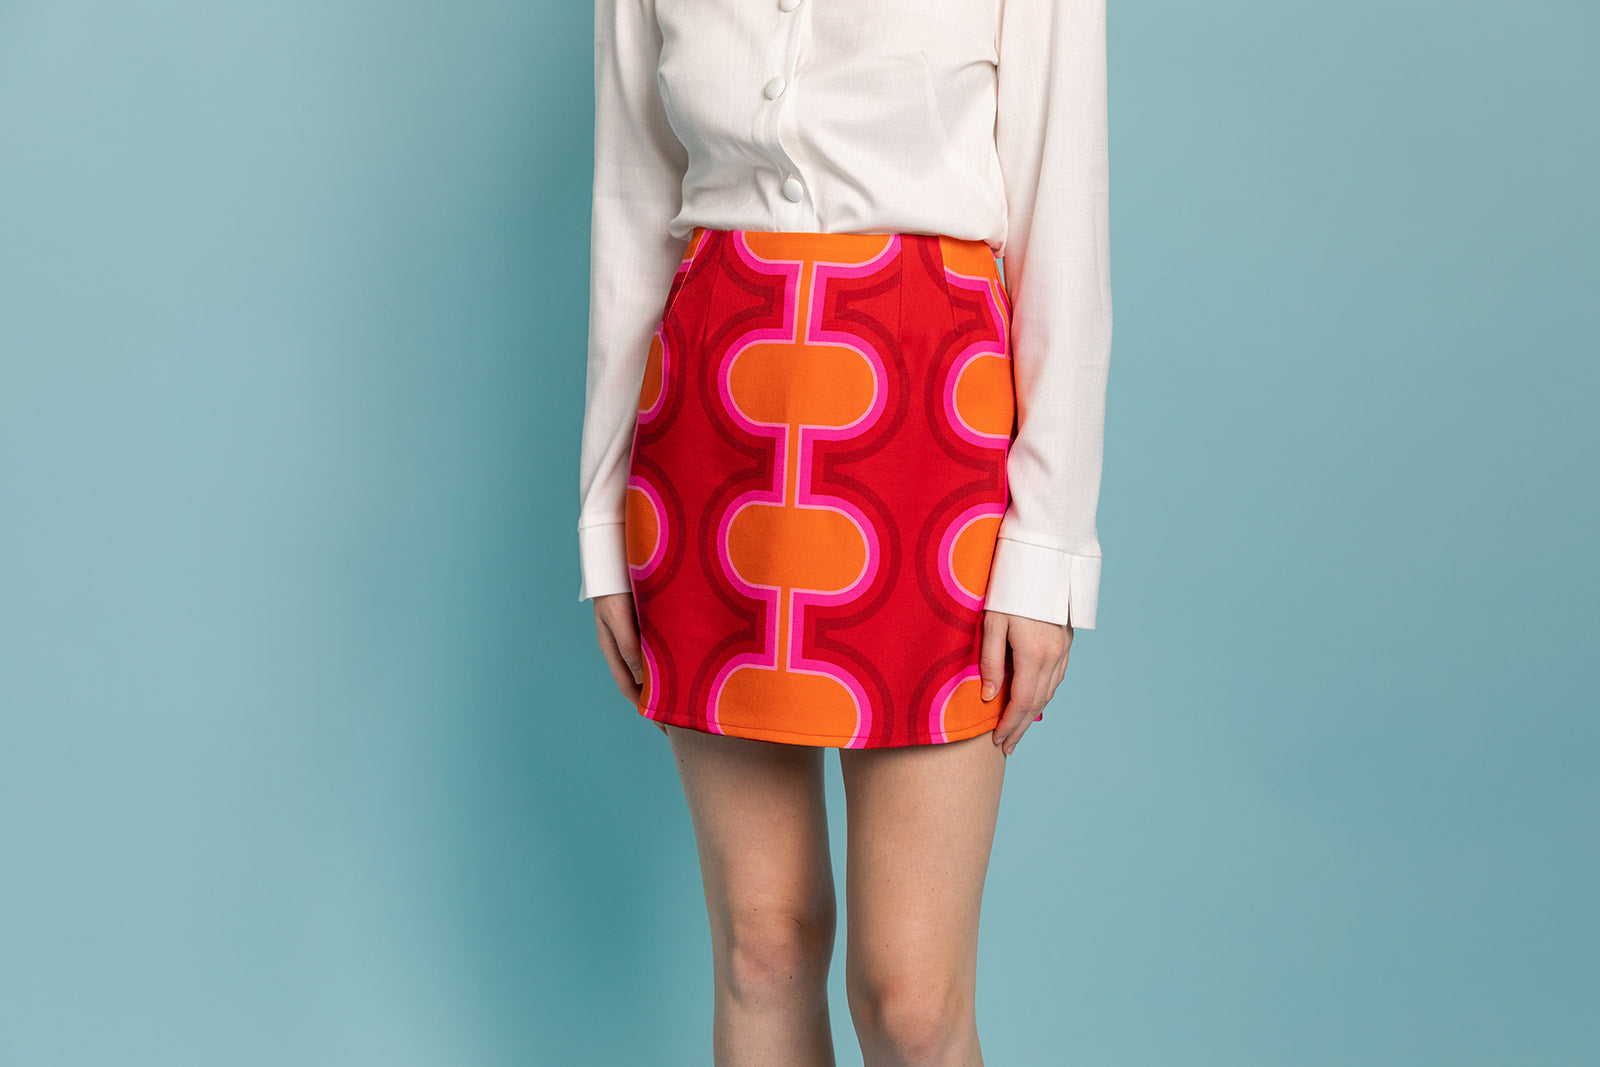 Closet Mod high waist a-line mini skirt in red, pink and orange retro 1960's print